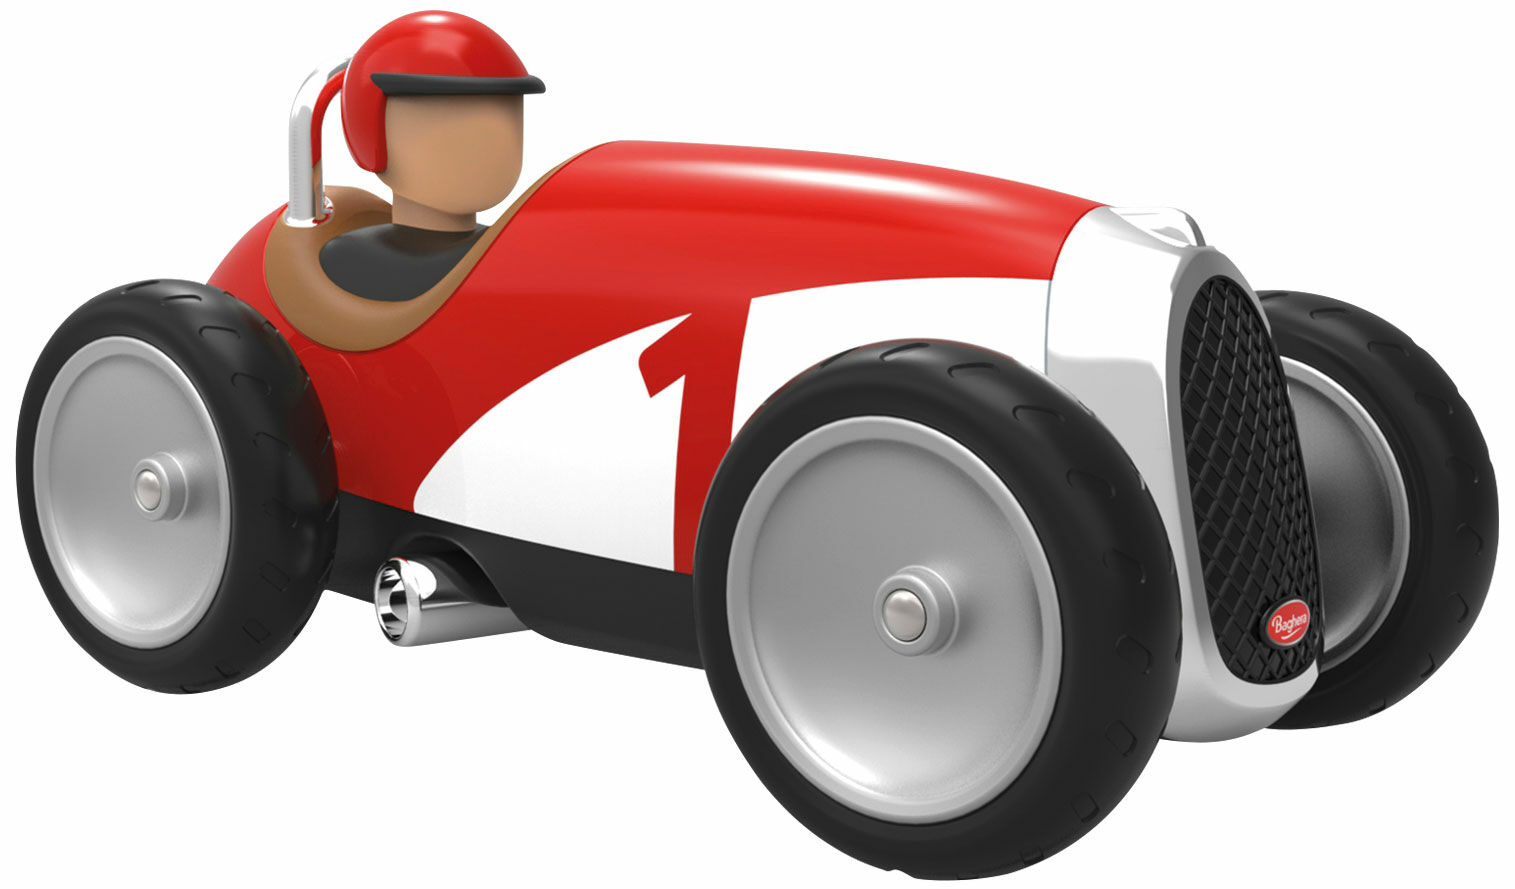 Speelgoedauto "Racing Car", rode versie von Baghera